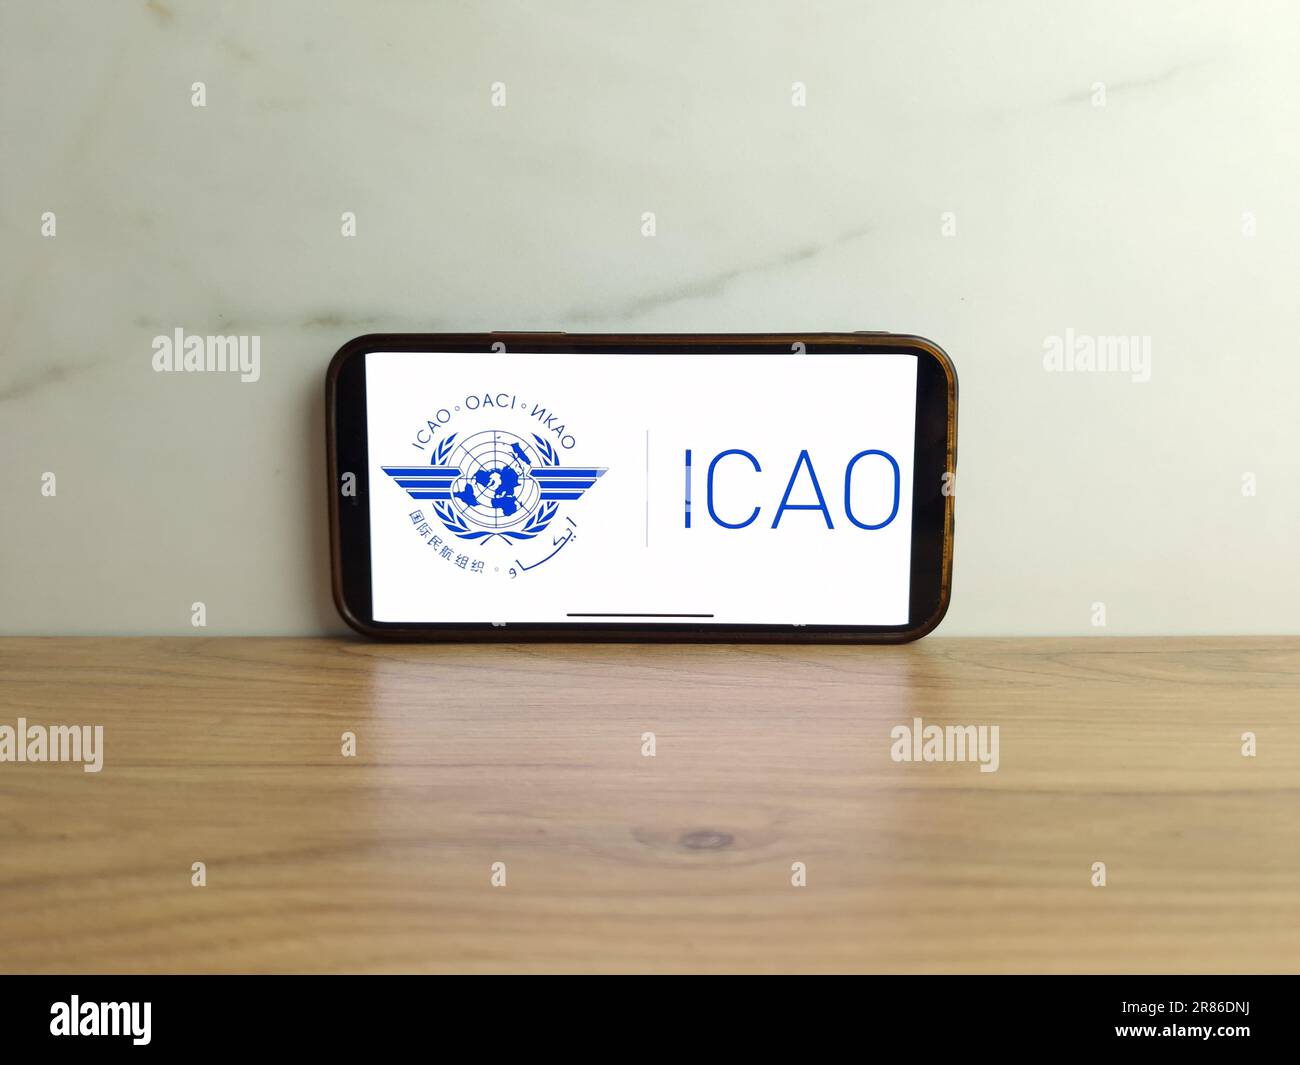 Konskie, Poland - June 17, 2023: ICAO International Civil Aviation Organization logo displayed on mobile phone screen Stock Photo